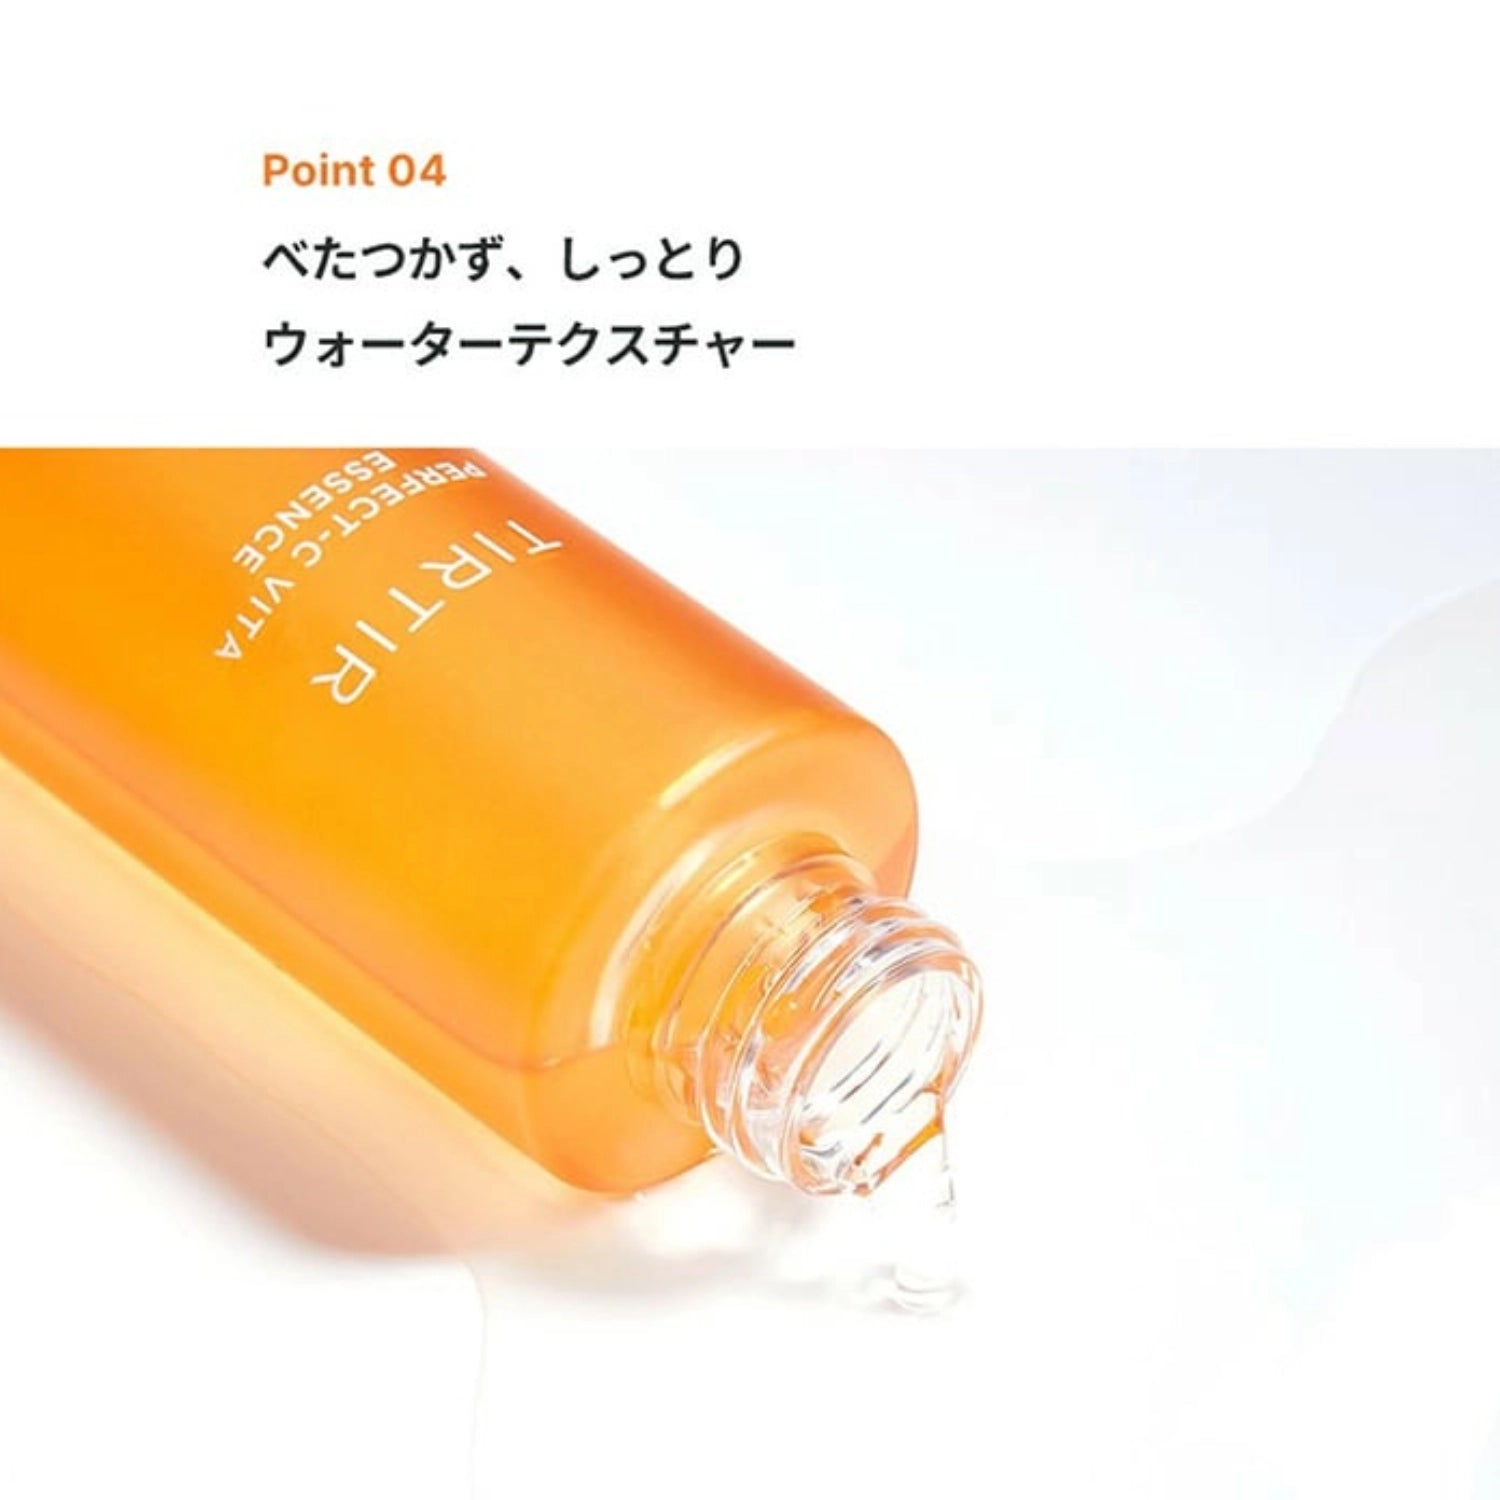 TIRTIR Perfect-C Vita Essence 150ml - Buy Me Japan